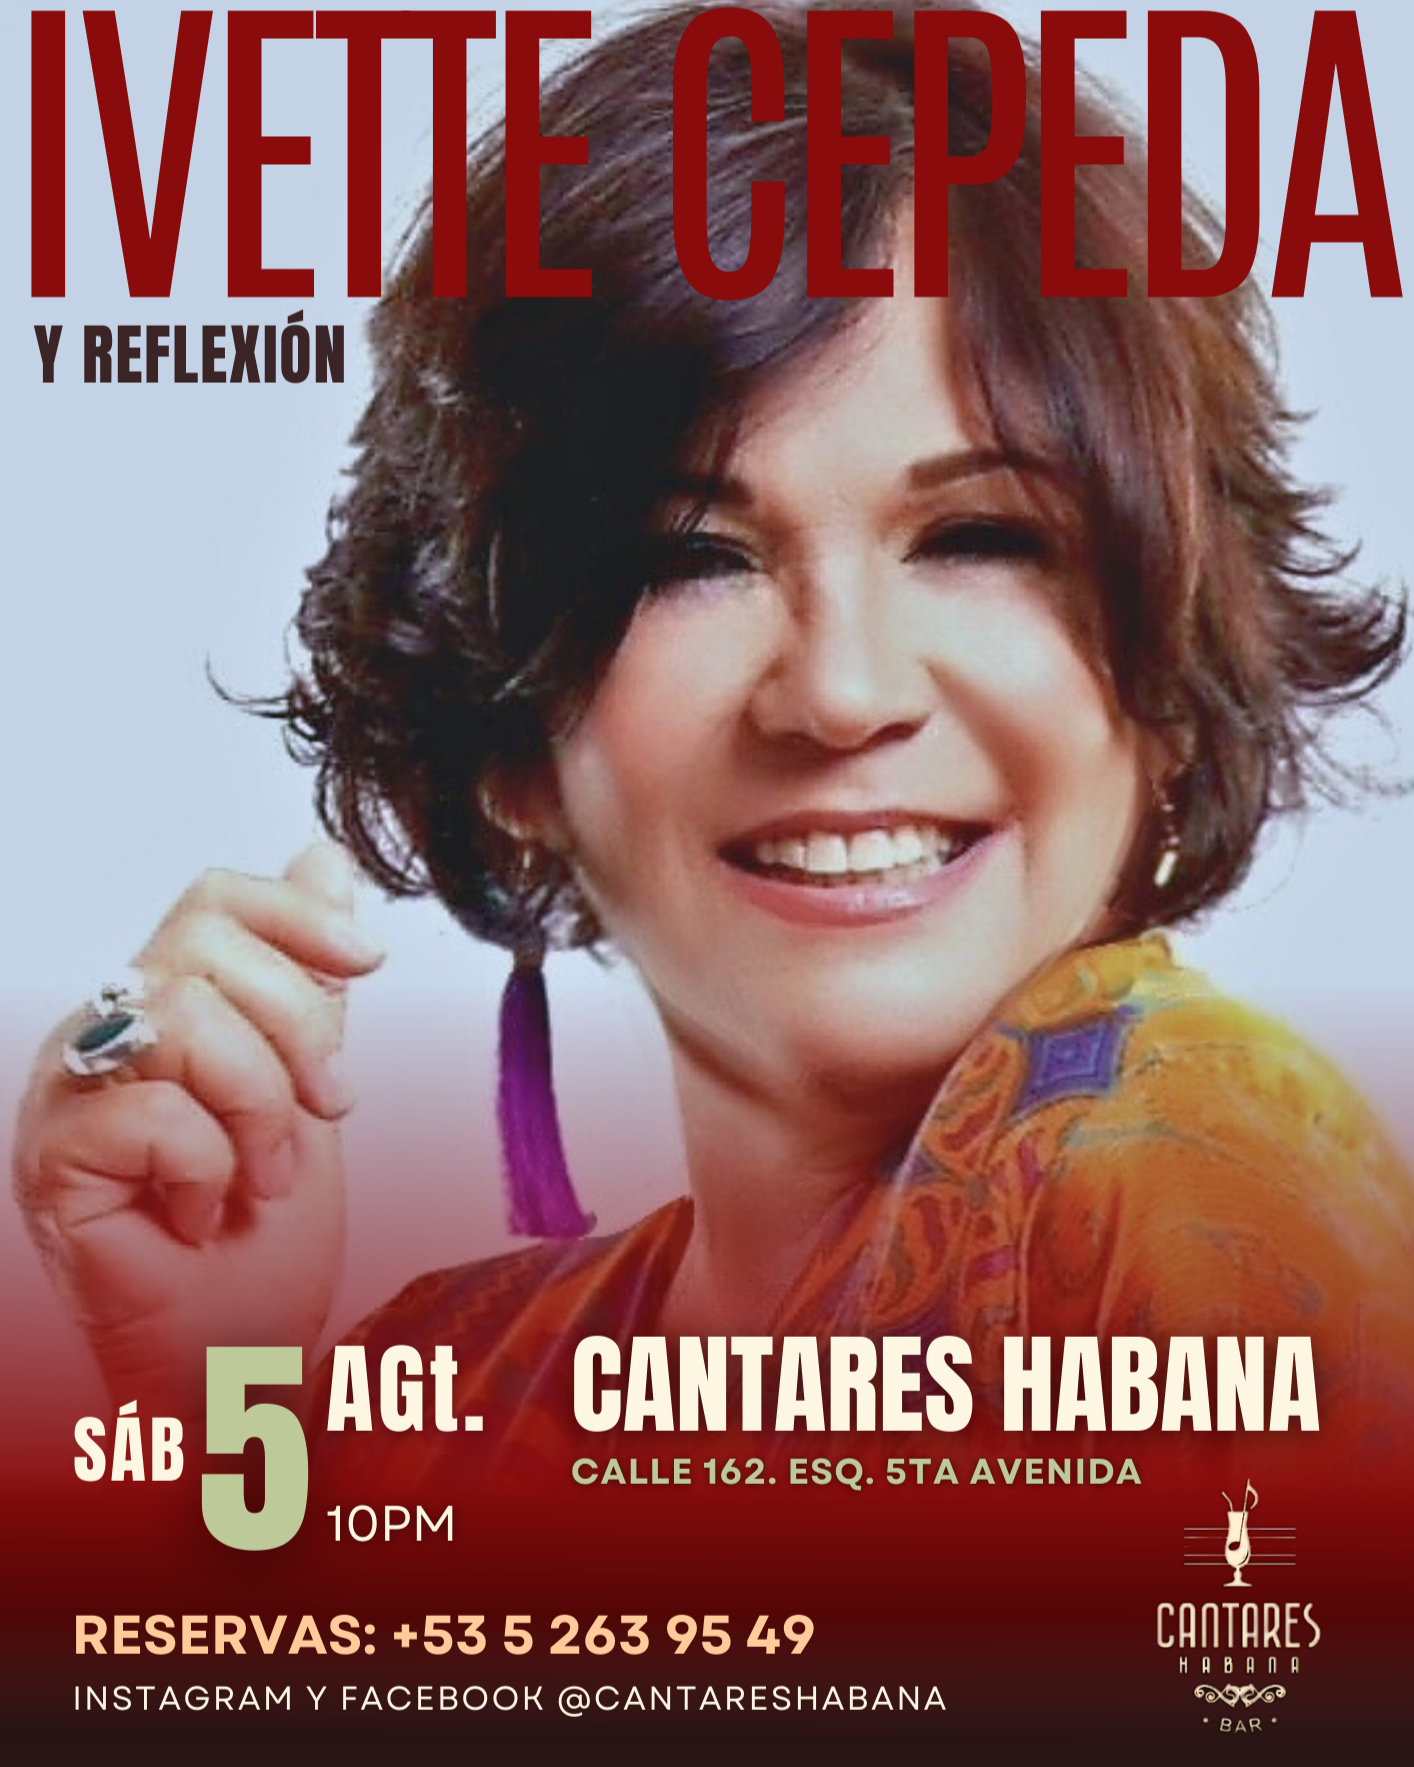 Ivette Cepeda bar Cantares Habana